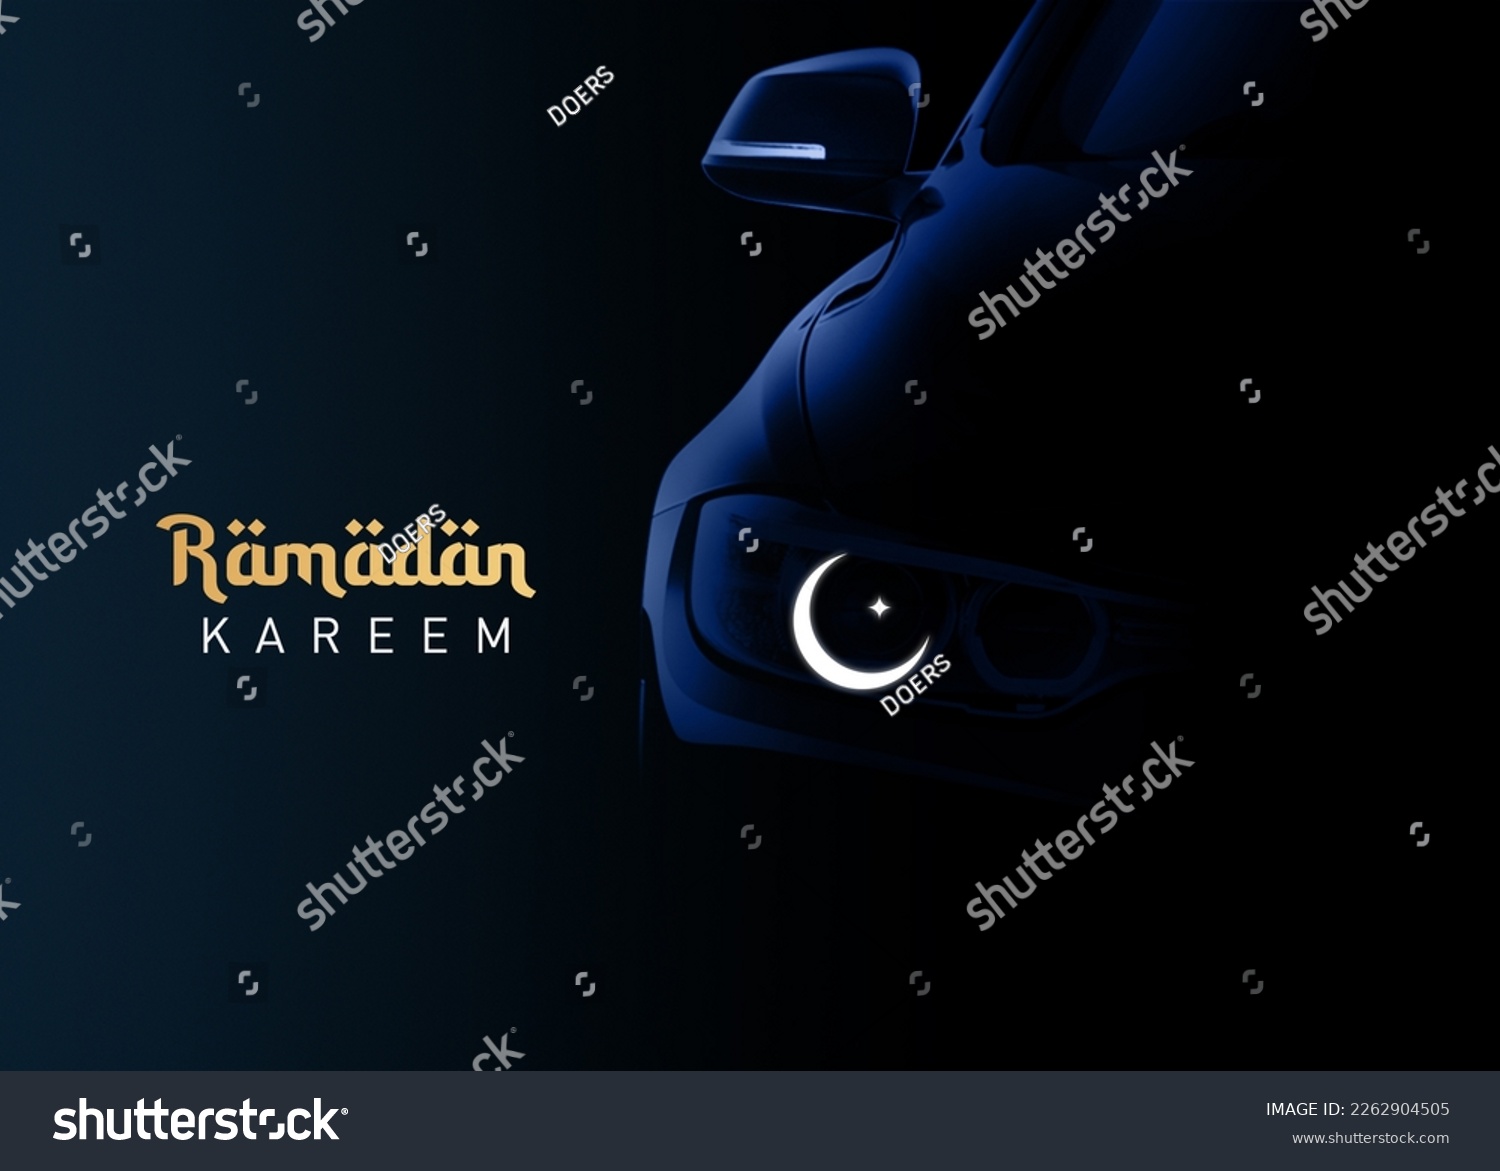 Car Ramadan Concept Background. Automobile businesses Ramadan concept greetings card illustration or social media content. Eid moon on car headlight  #2262904505